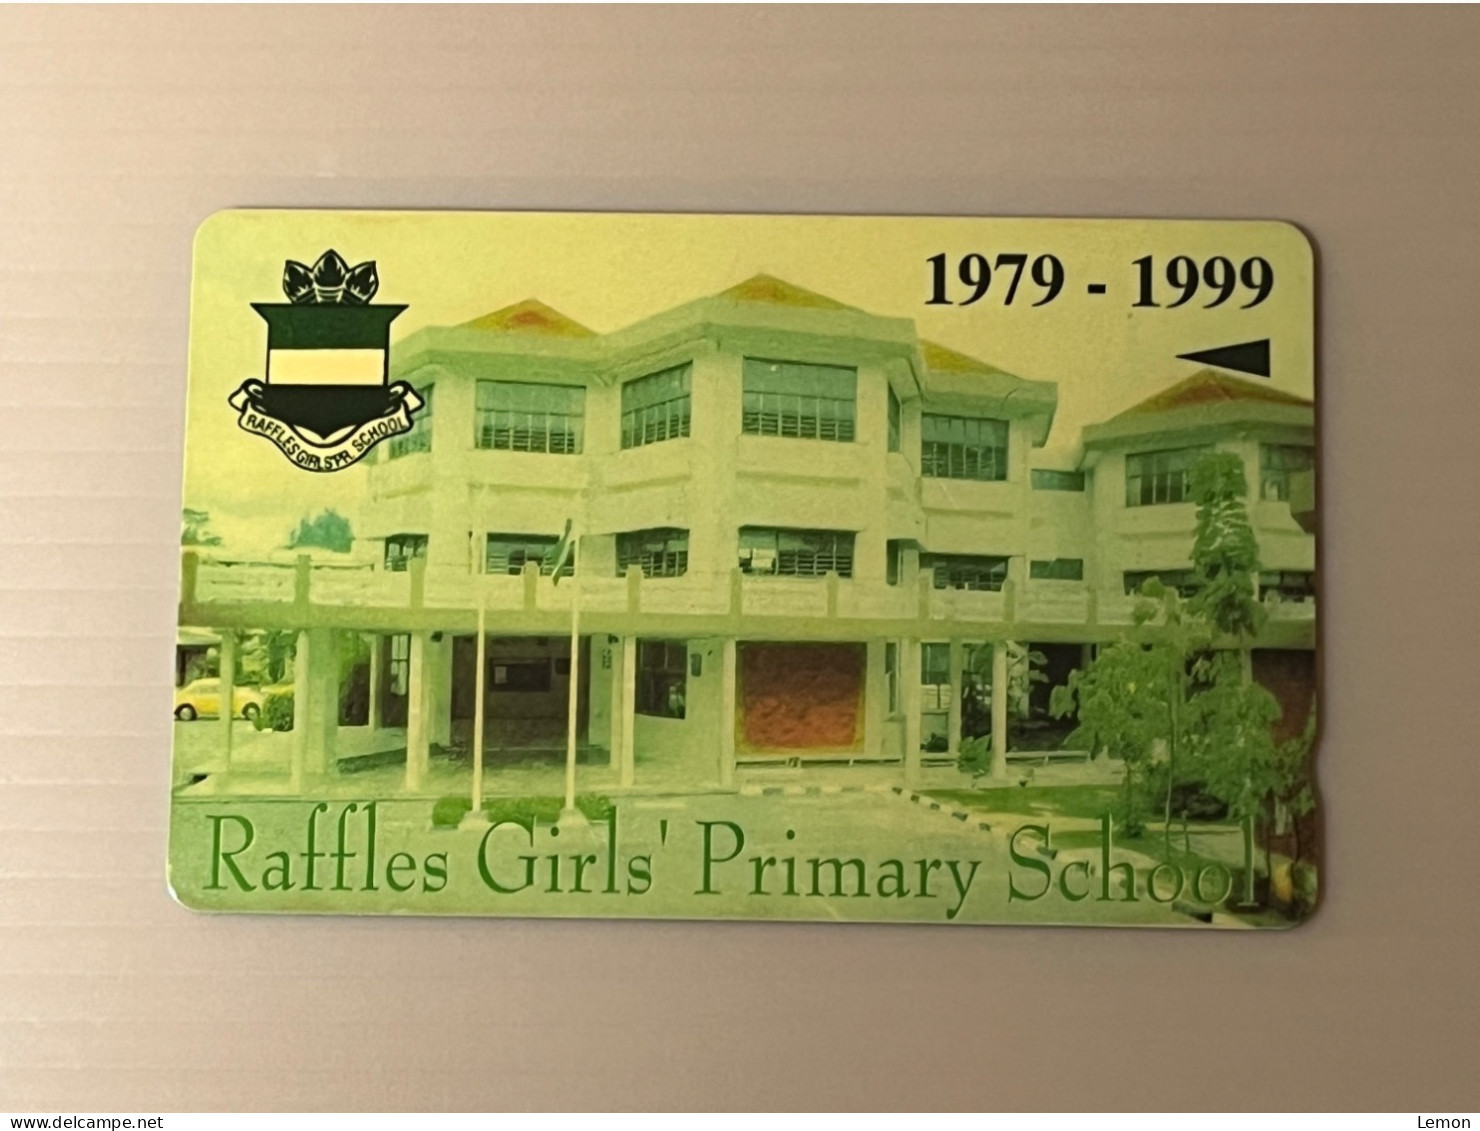 Mint Singapore Telecom Singtel GPT Phonecard, Raffles Girls’ Primary School 1979-1999, Set Of 1 Mint Card - Singapore